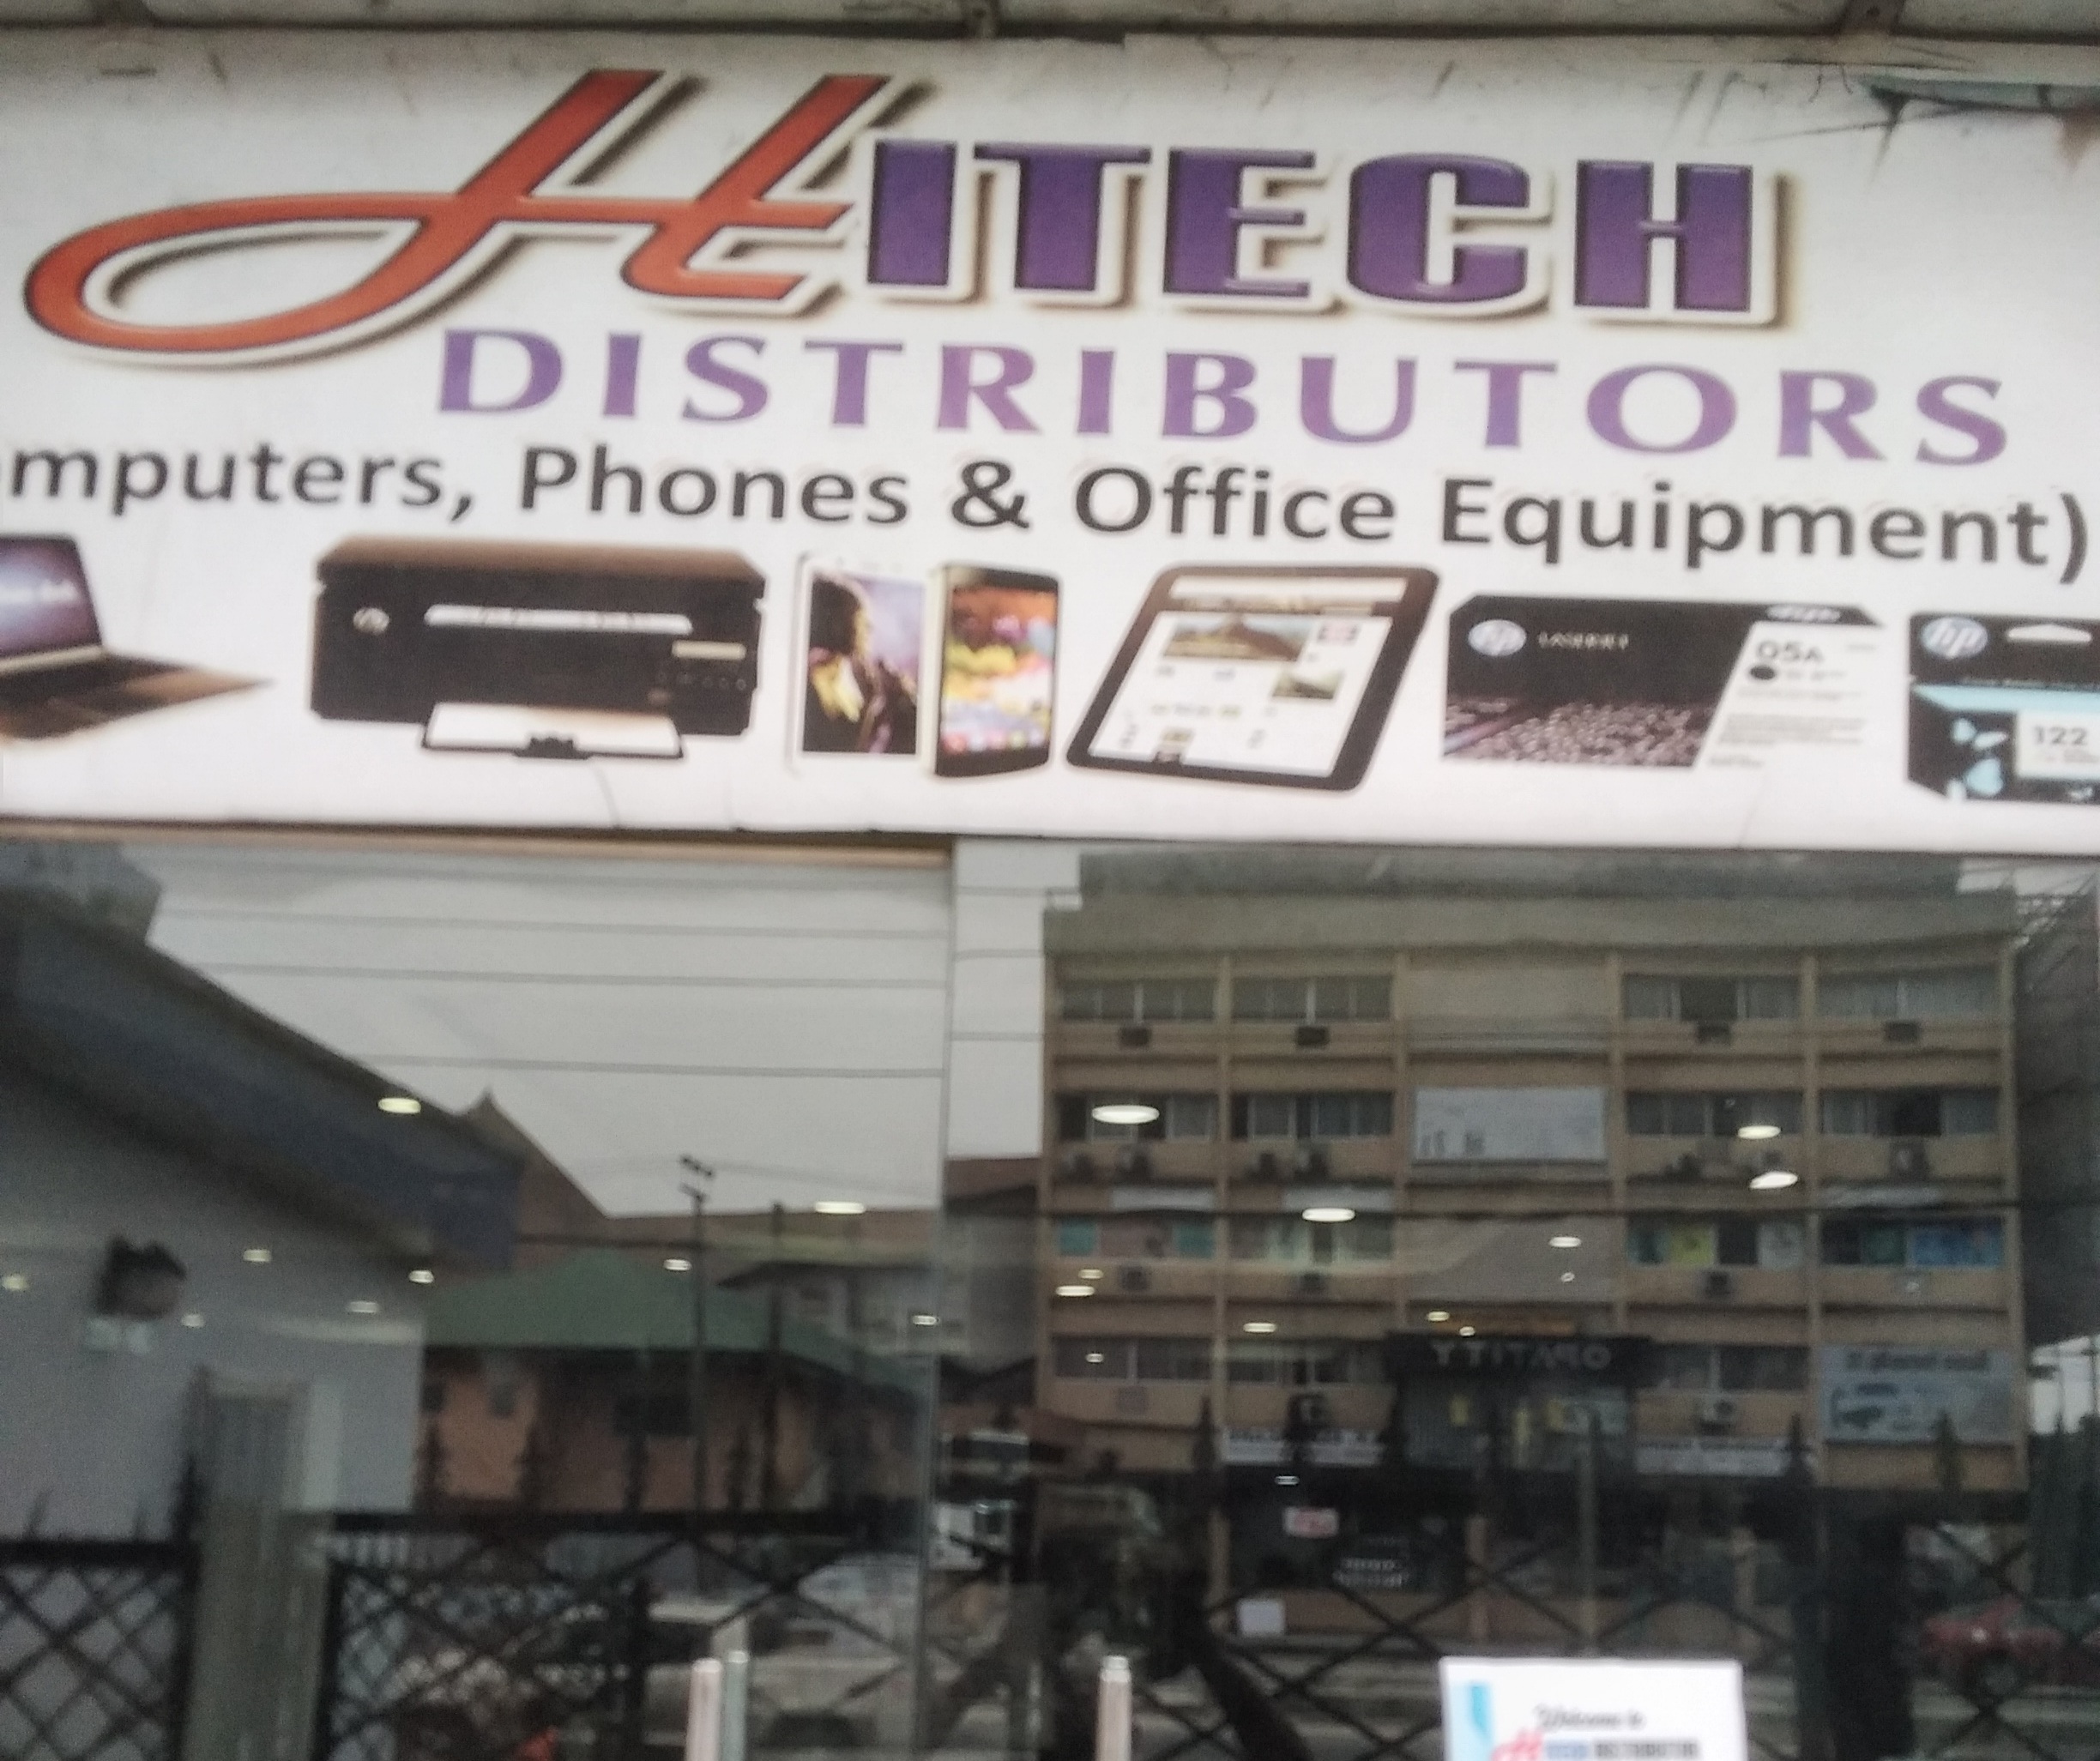 Hi-tech Distributors (Computer and Accessories) Banner